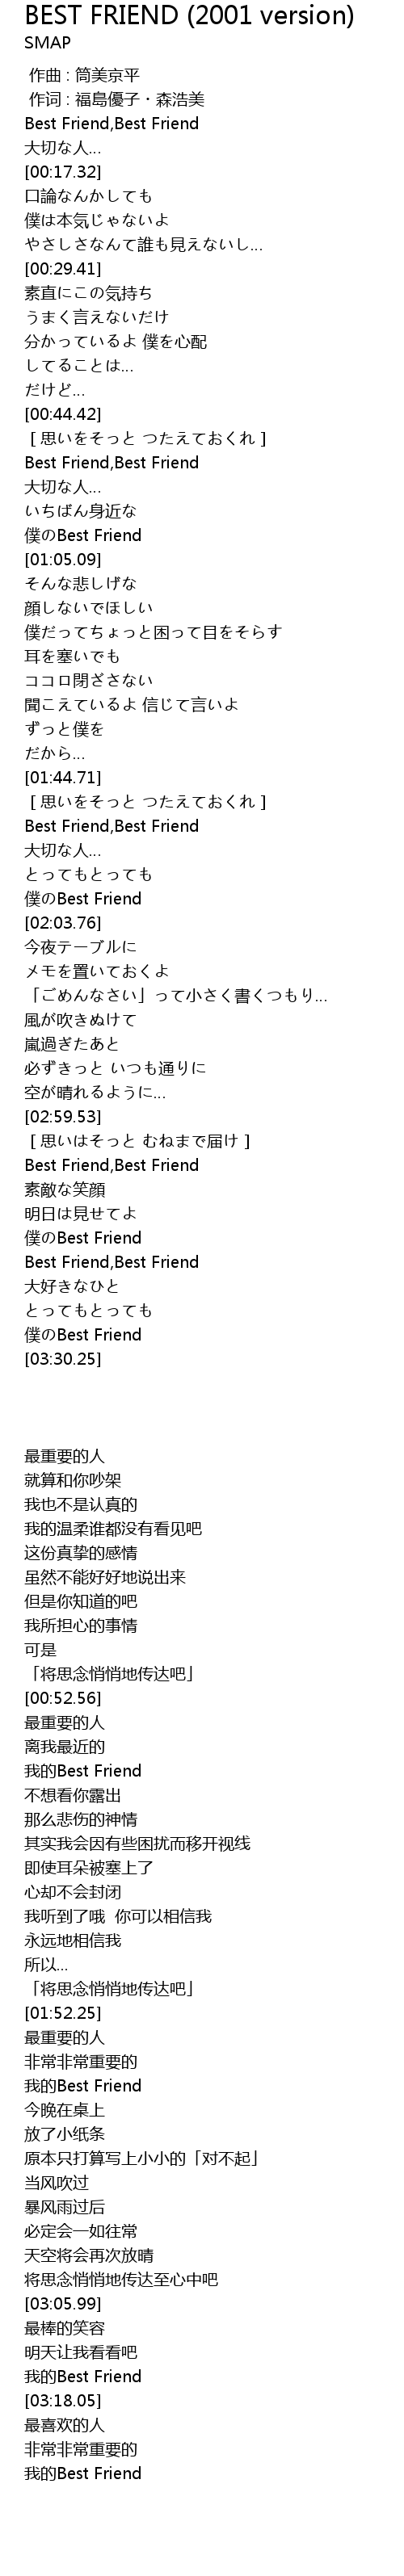 Best Friend 01 Version Lyrics Follow Lyrics